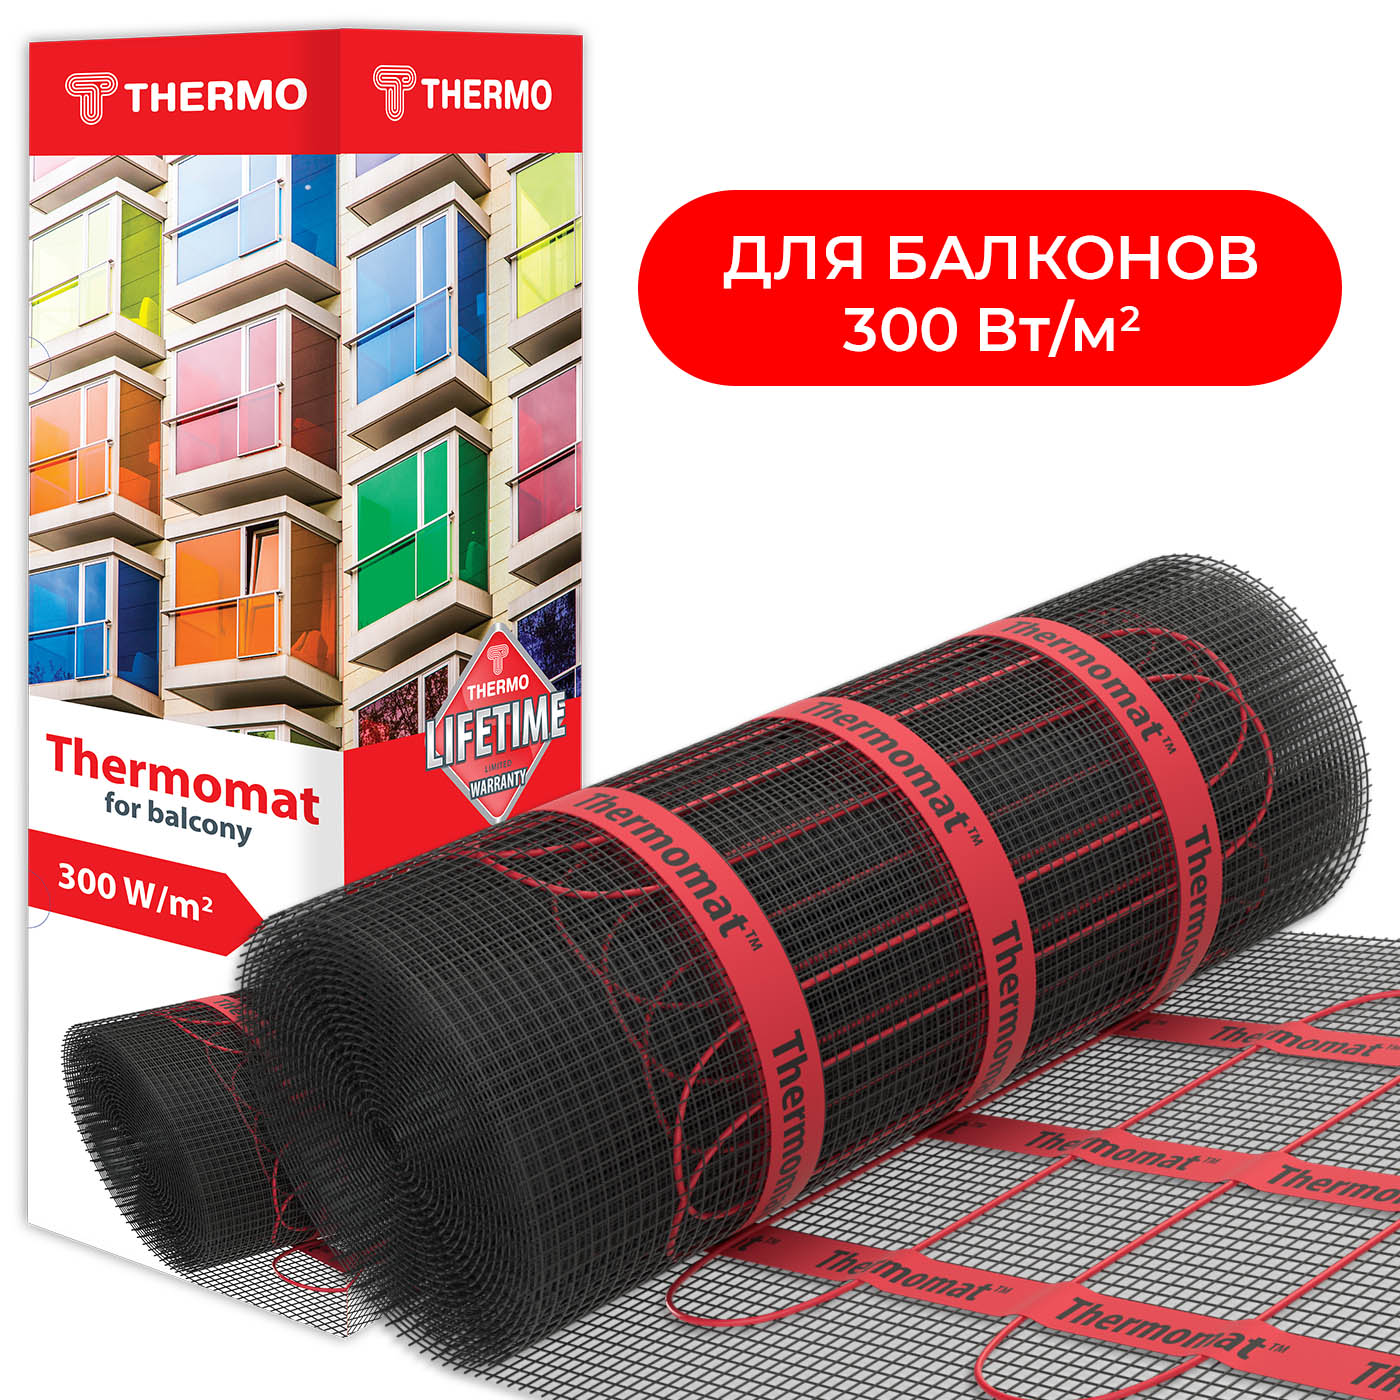 Thermomat 300 Вт/м² l Греющий мат для балконов и лоджий от бренда Thermo